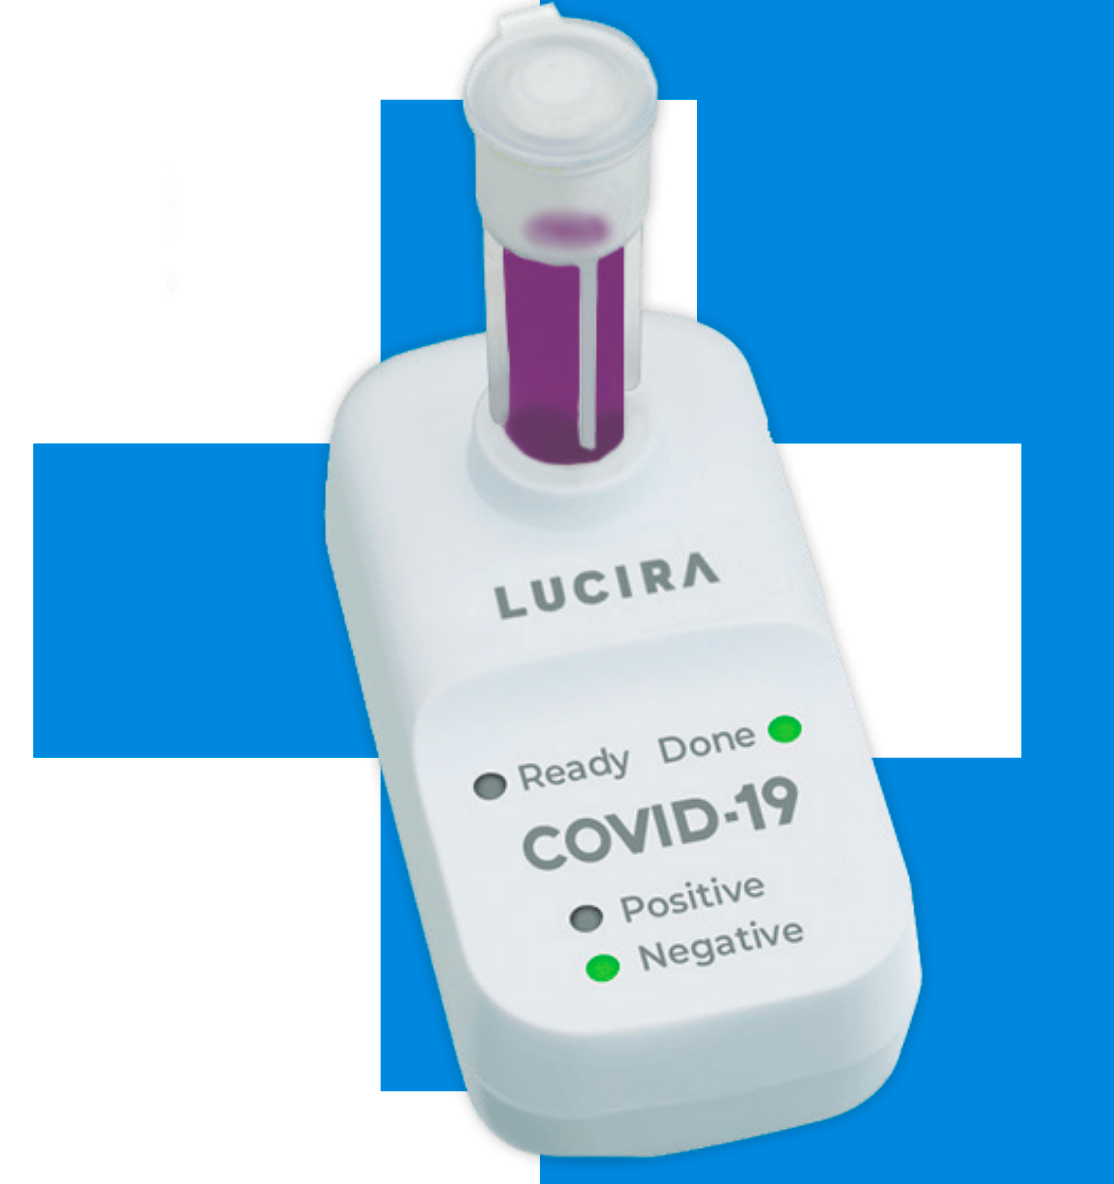 Lucira COVID-19 test kit